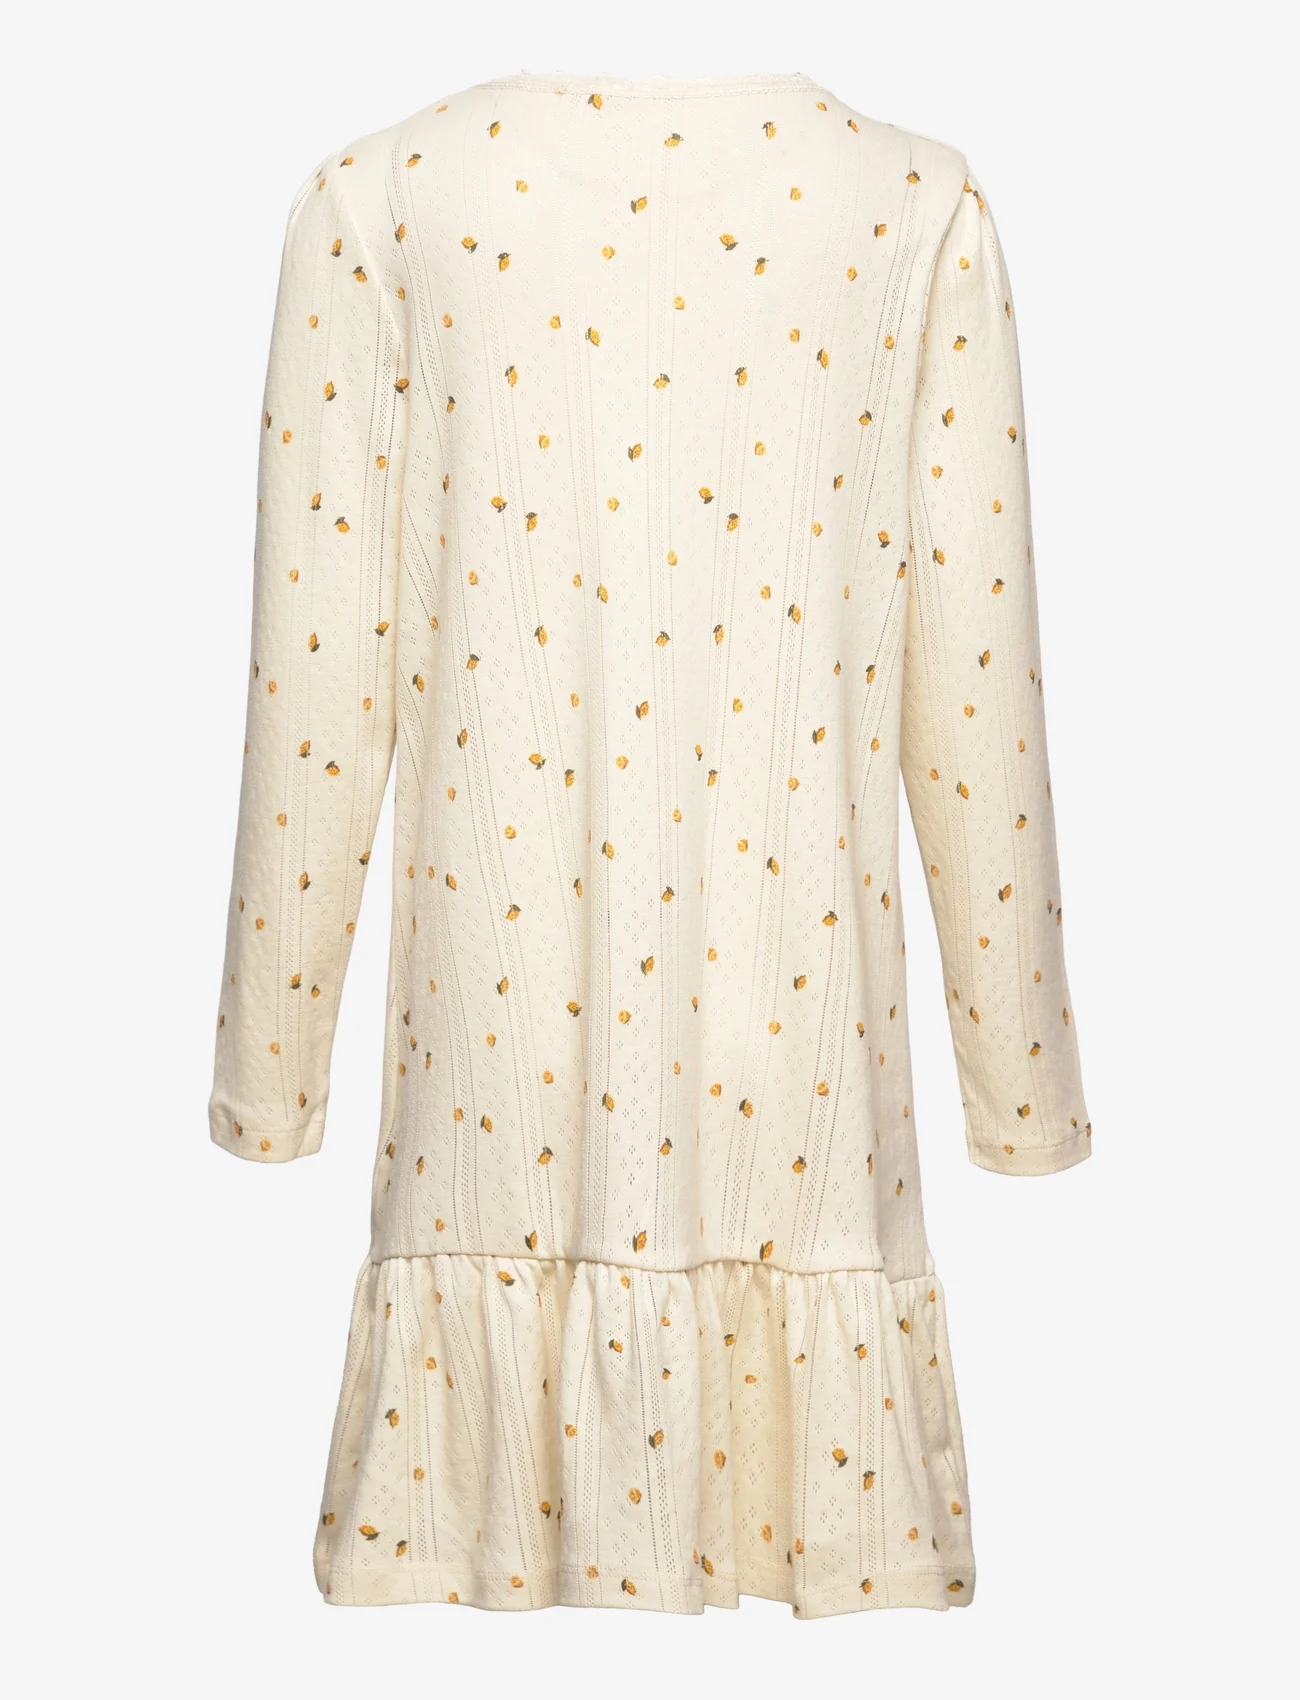 Noa Noa miniature - Dress long sleeve - laisvalaikio suknelės ilgomis rankovėmis - print lemon - 1